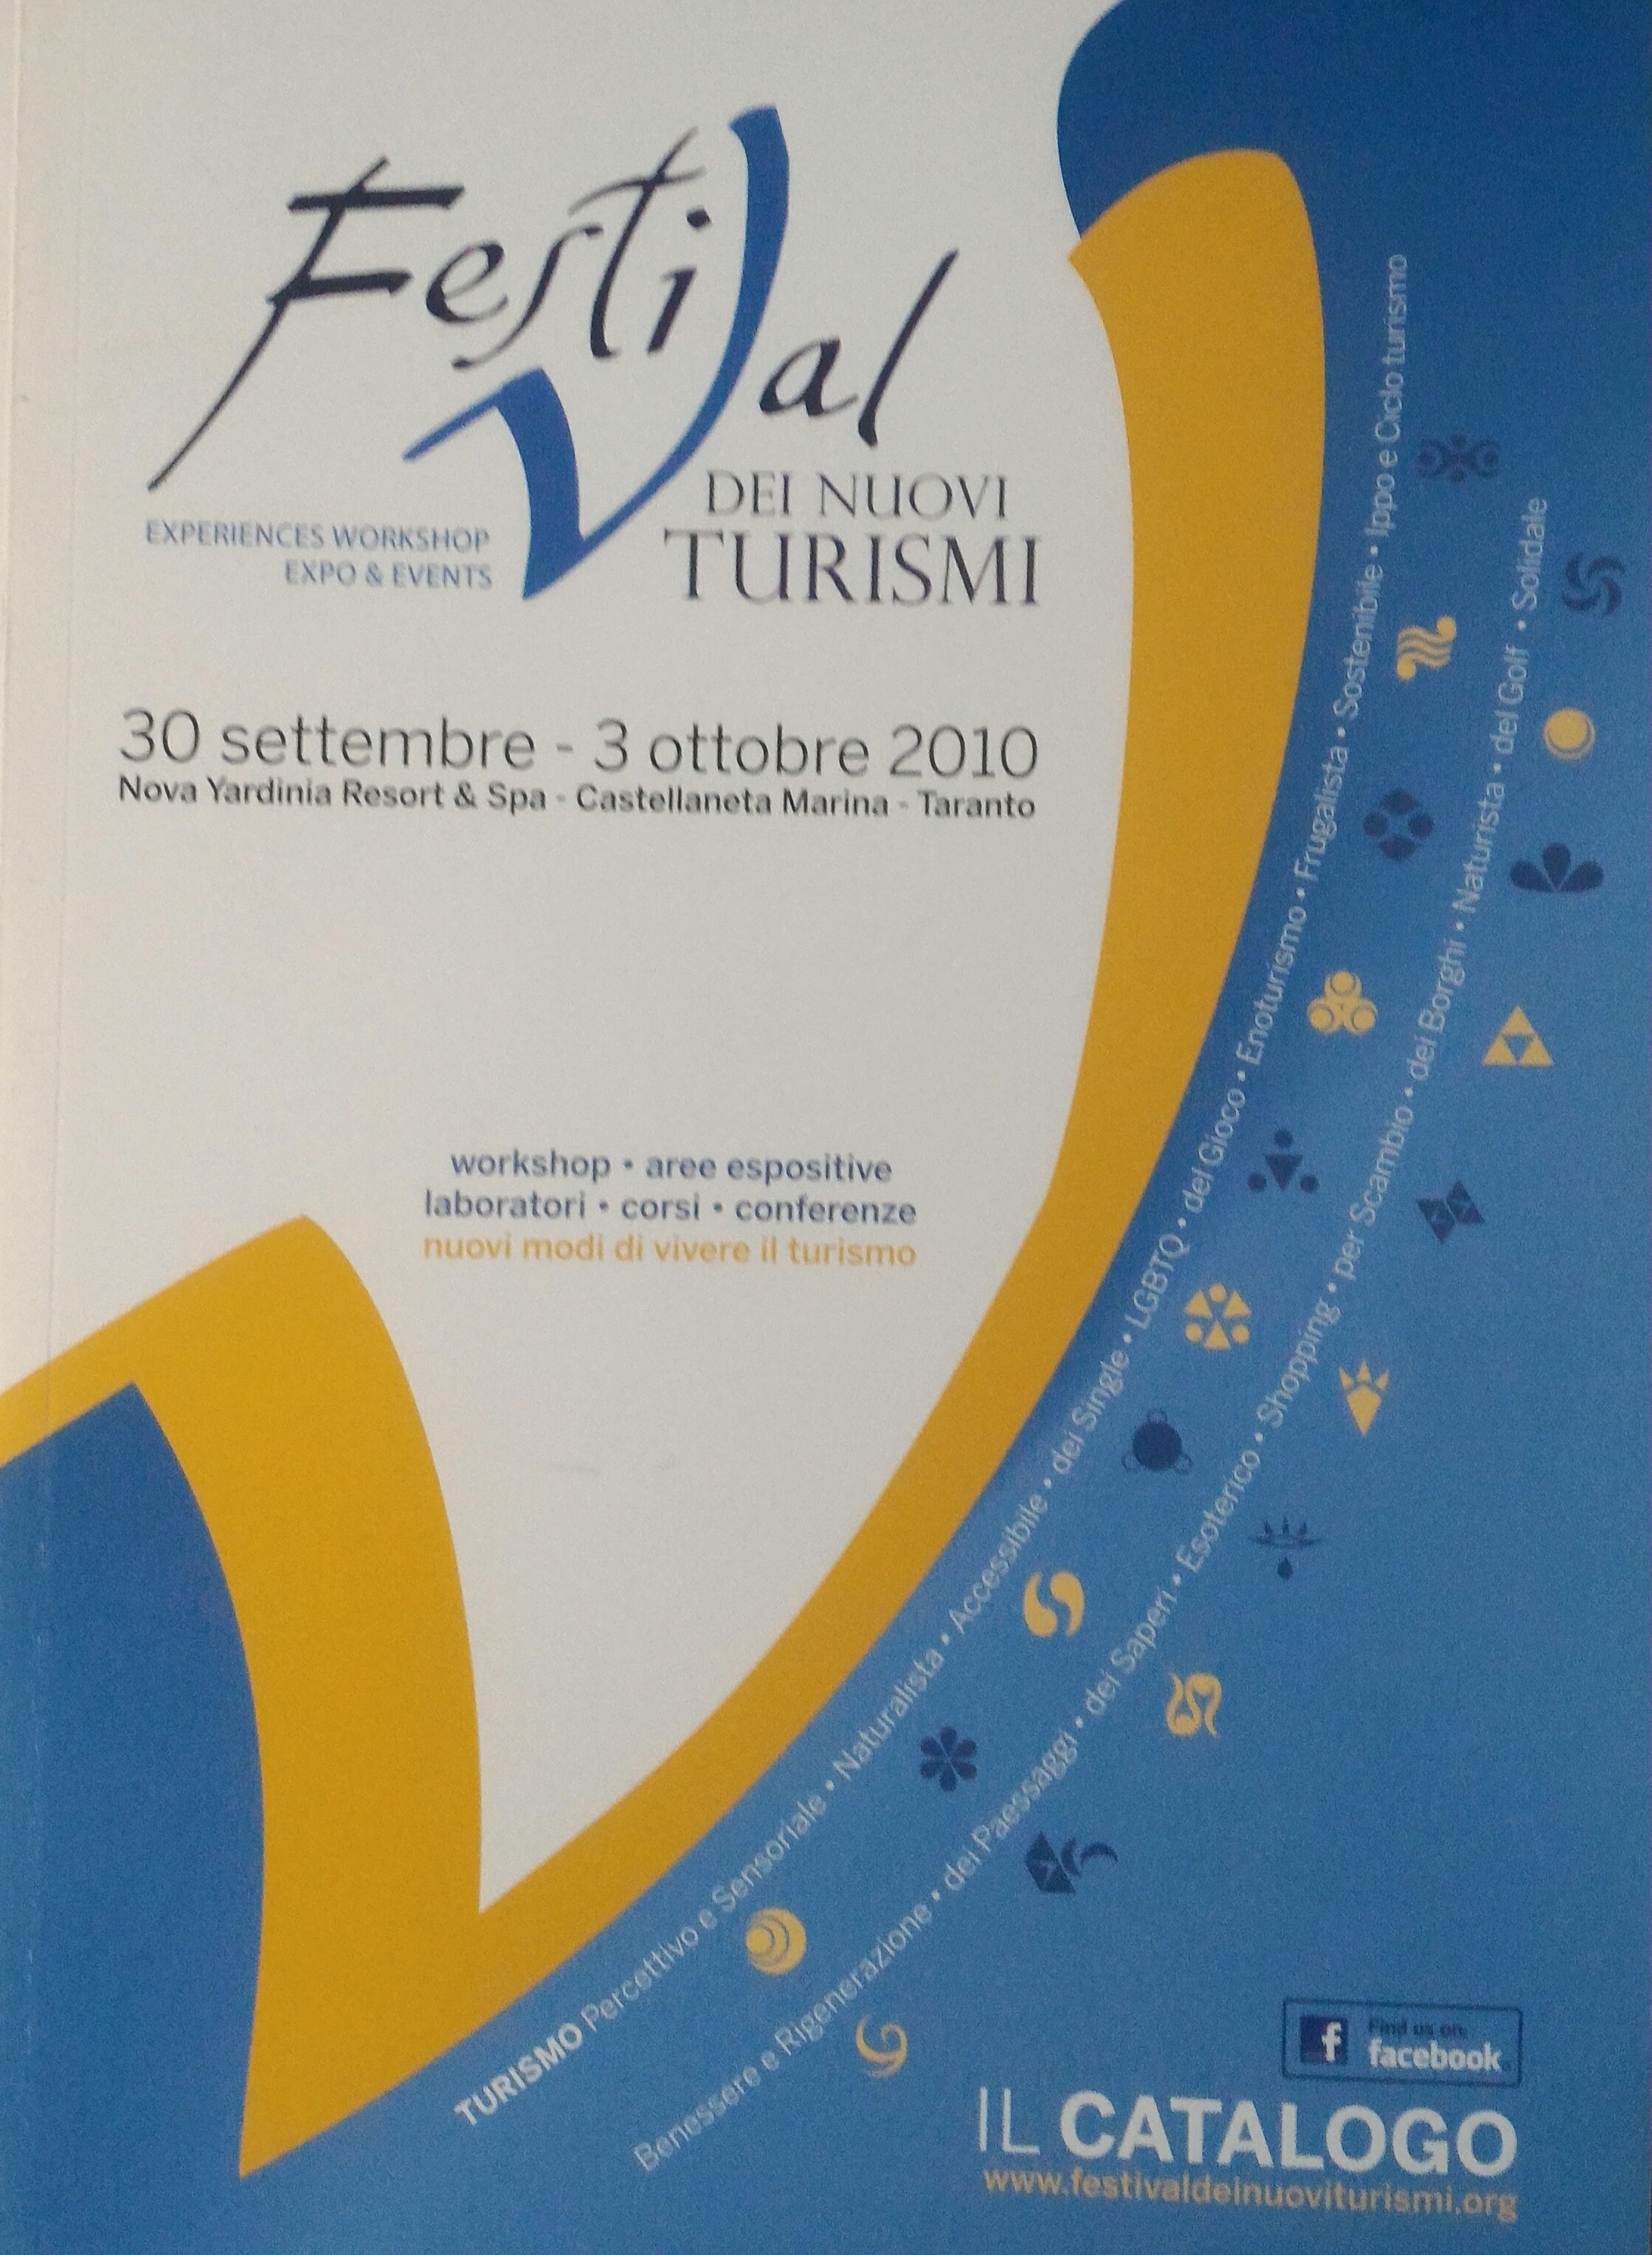 Festival dei Nuovi Turismi - experiences, workshops, expo and events